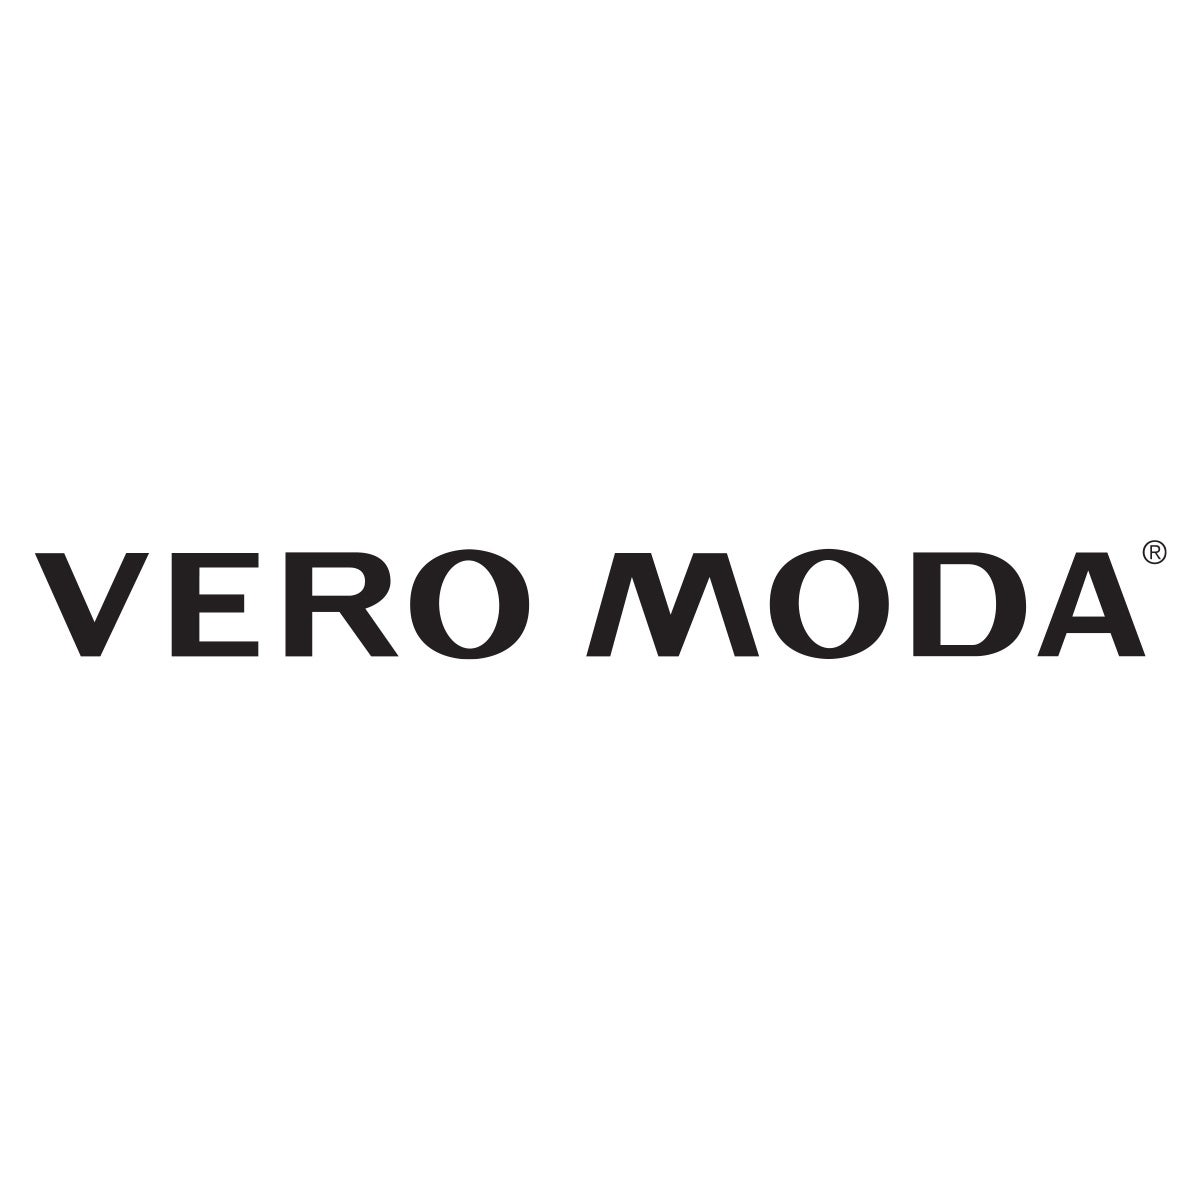 indrømme klinke Bedstefar Women's Clothing & Fashion | VERO MODA®